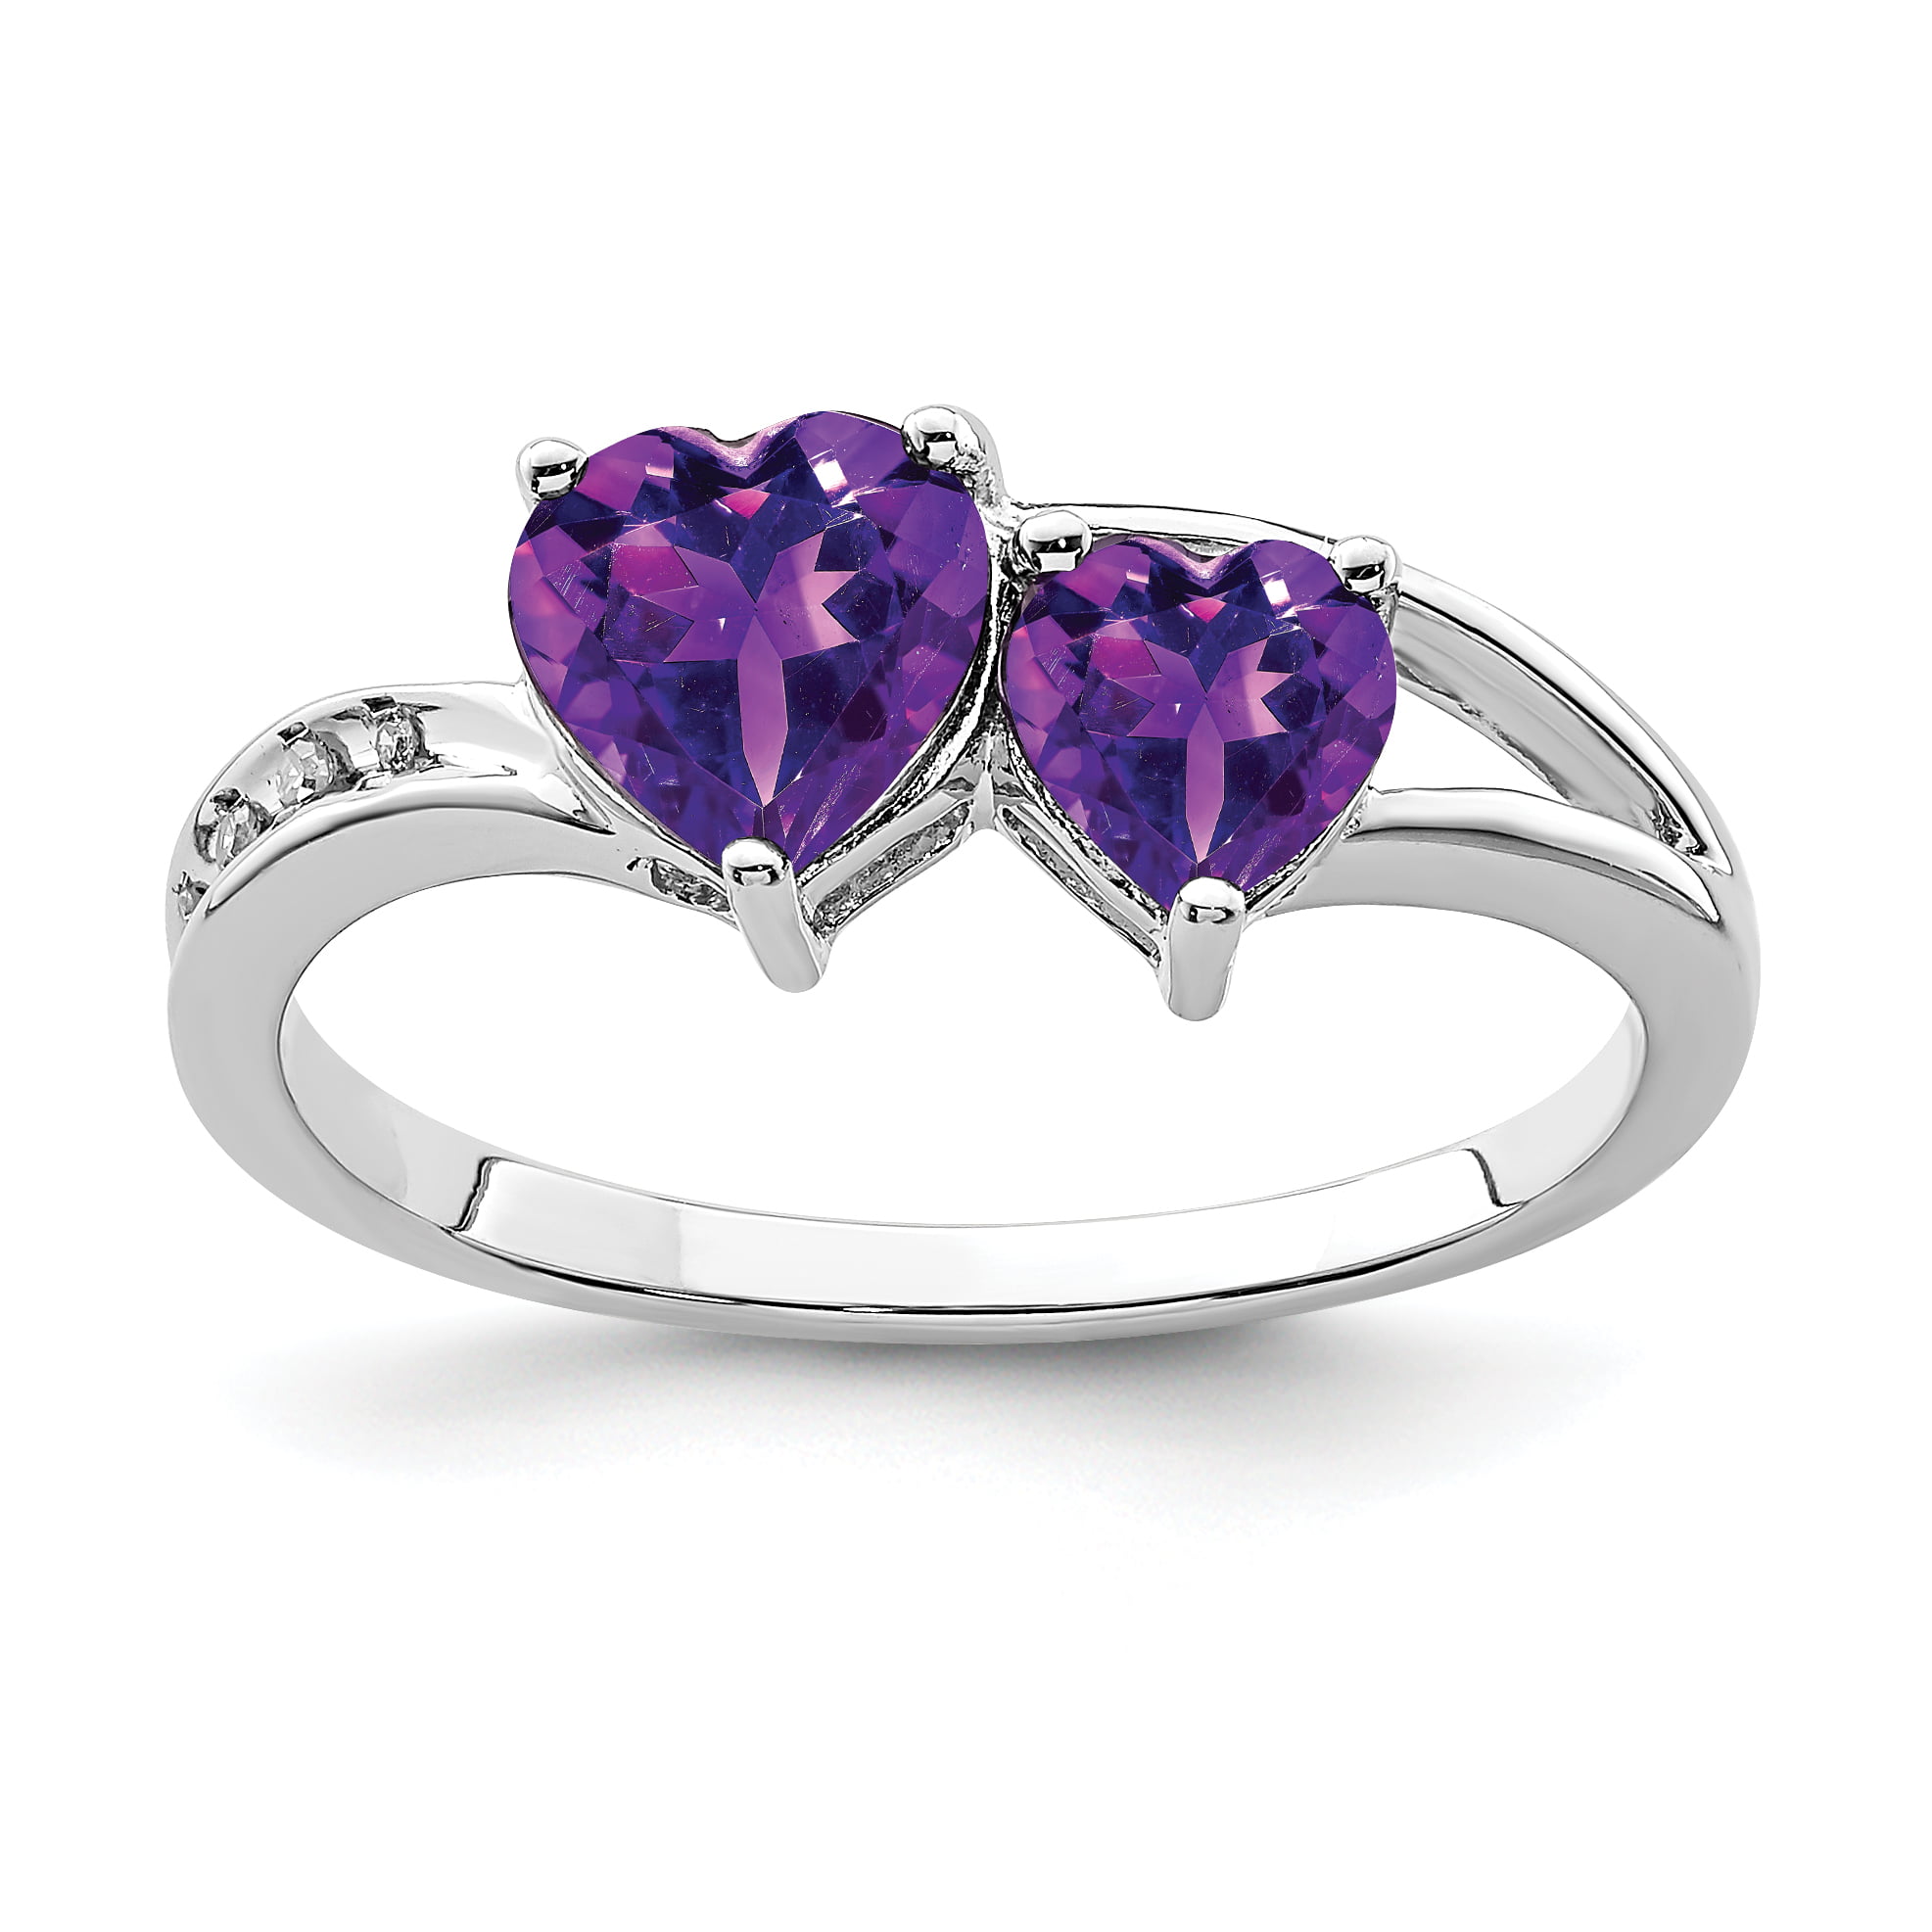 New KJC Sterling Silver 925 Purple Amethyst Heart White Gemstone Band Ring Size7 